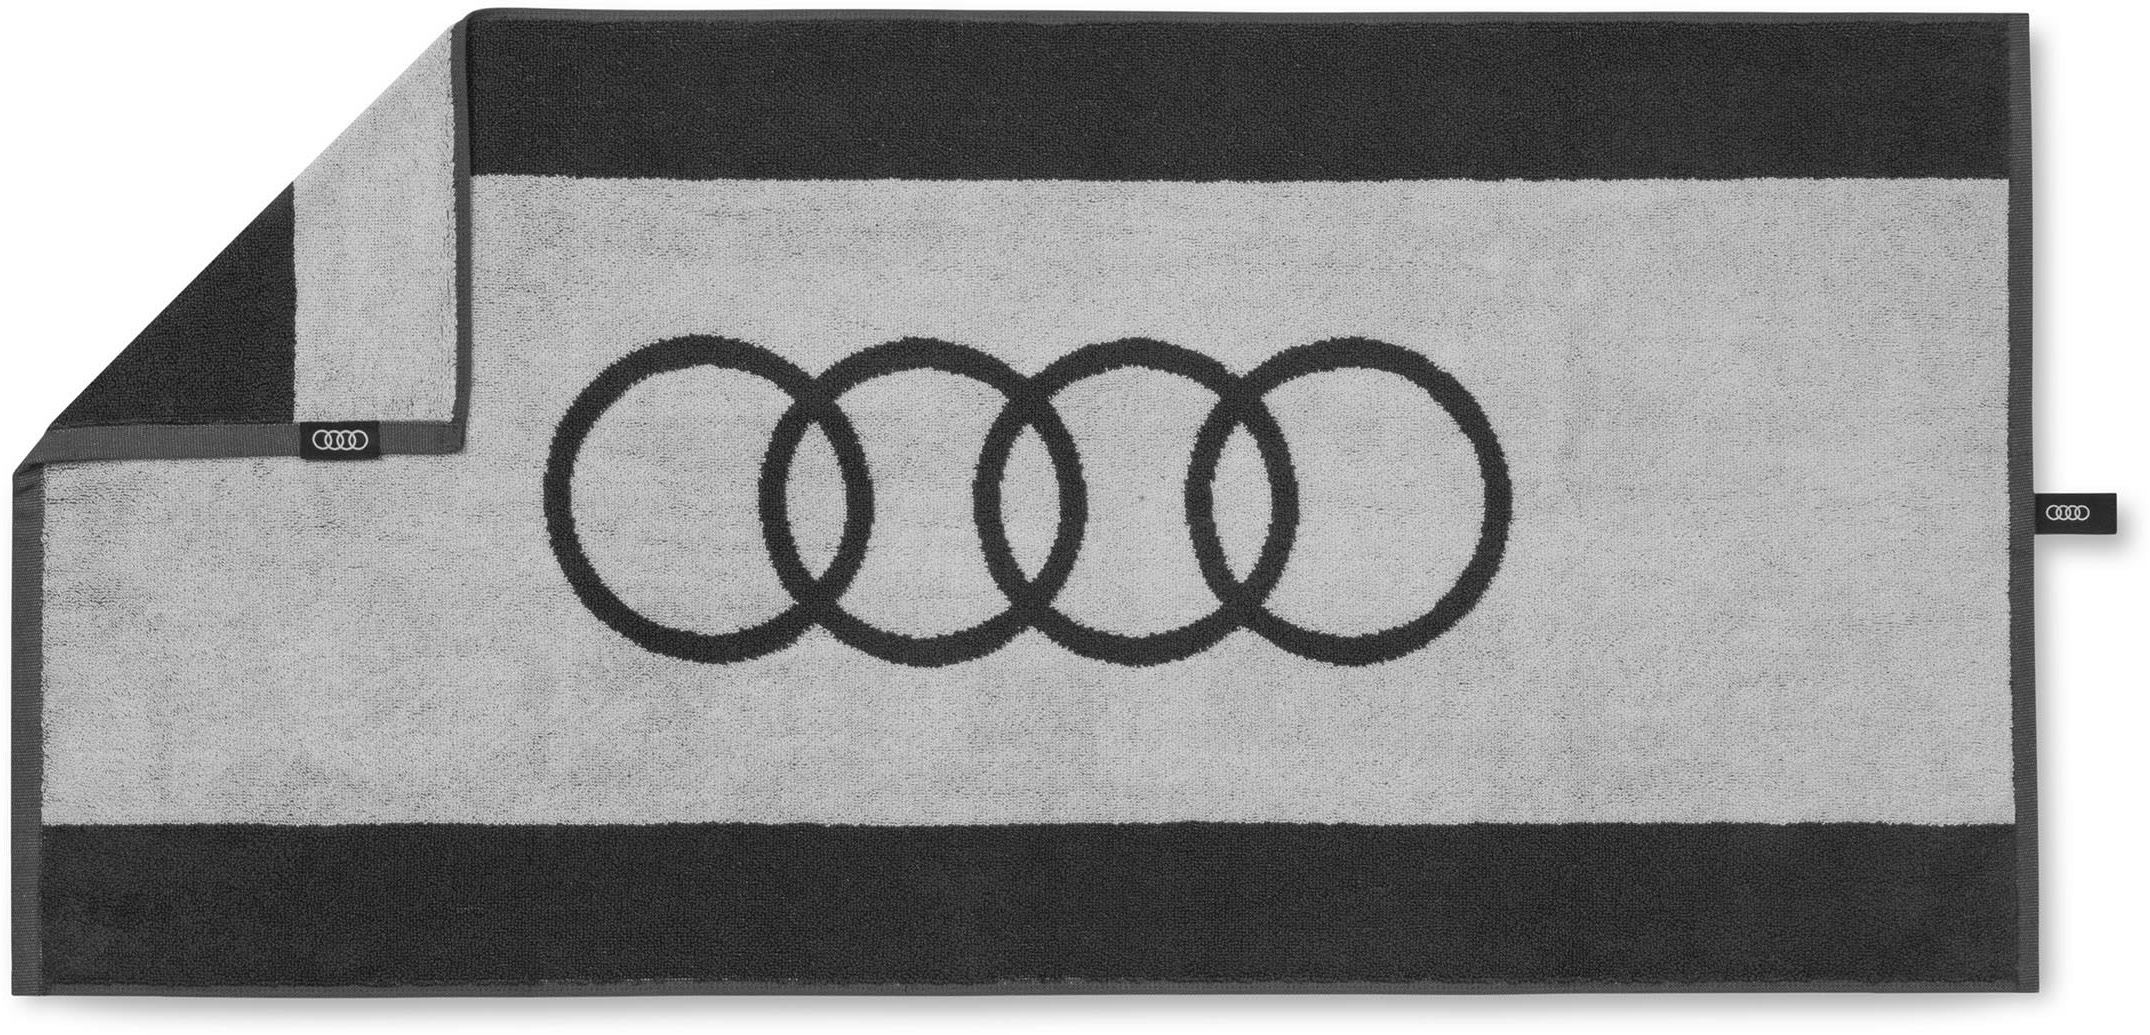 Audi 3132301800 Handtuch Ringe Logo Badetuch Badehandtuch Strandtuch, 150x80cm, grau